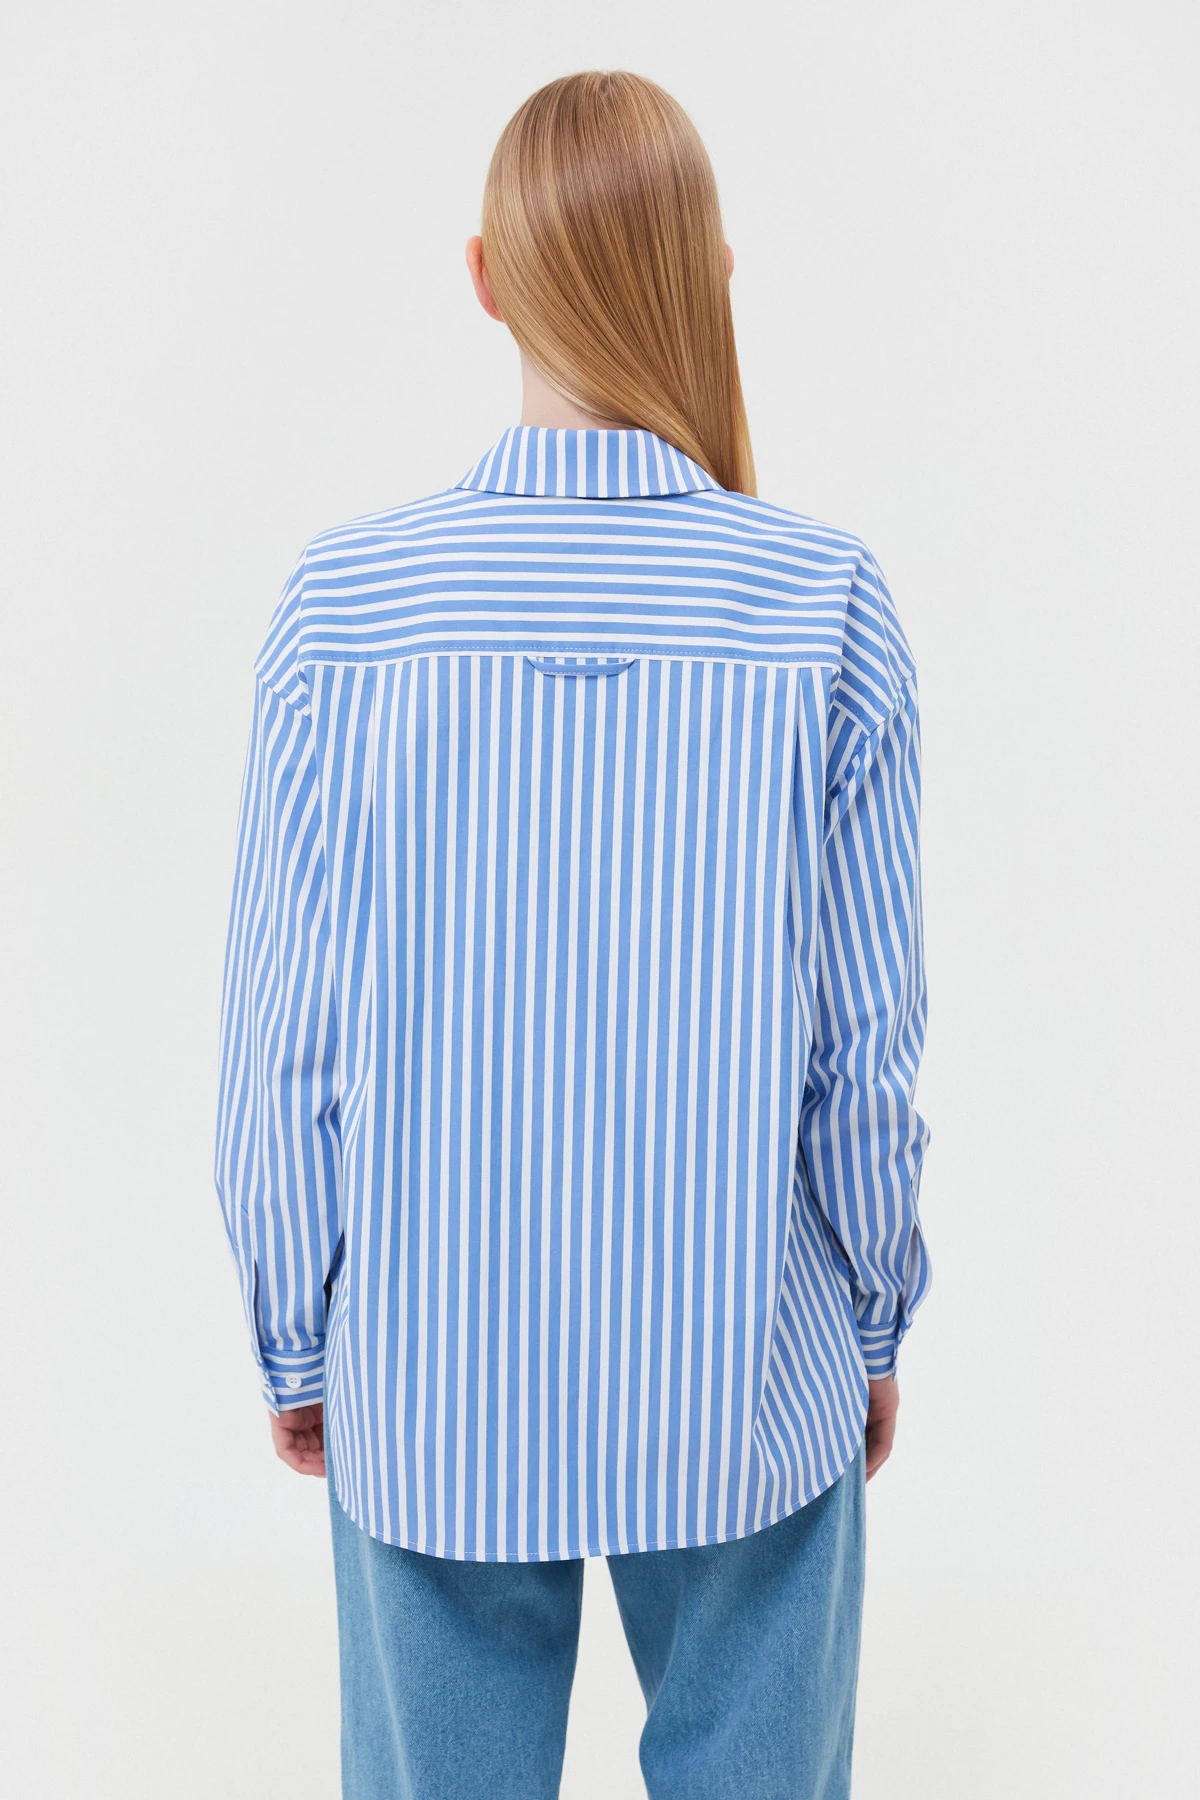 Loose-fit white striped cotton shirt, photo 5